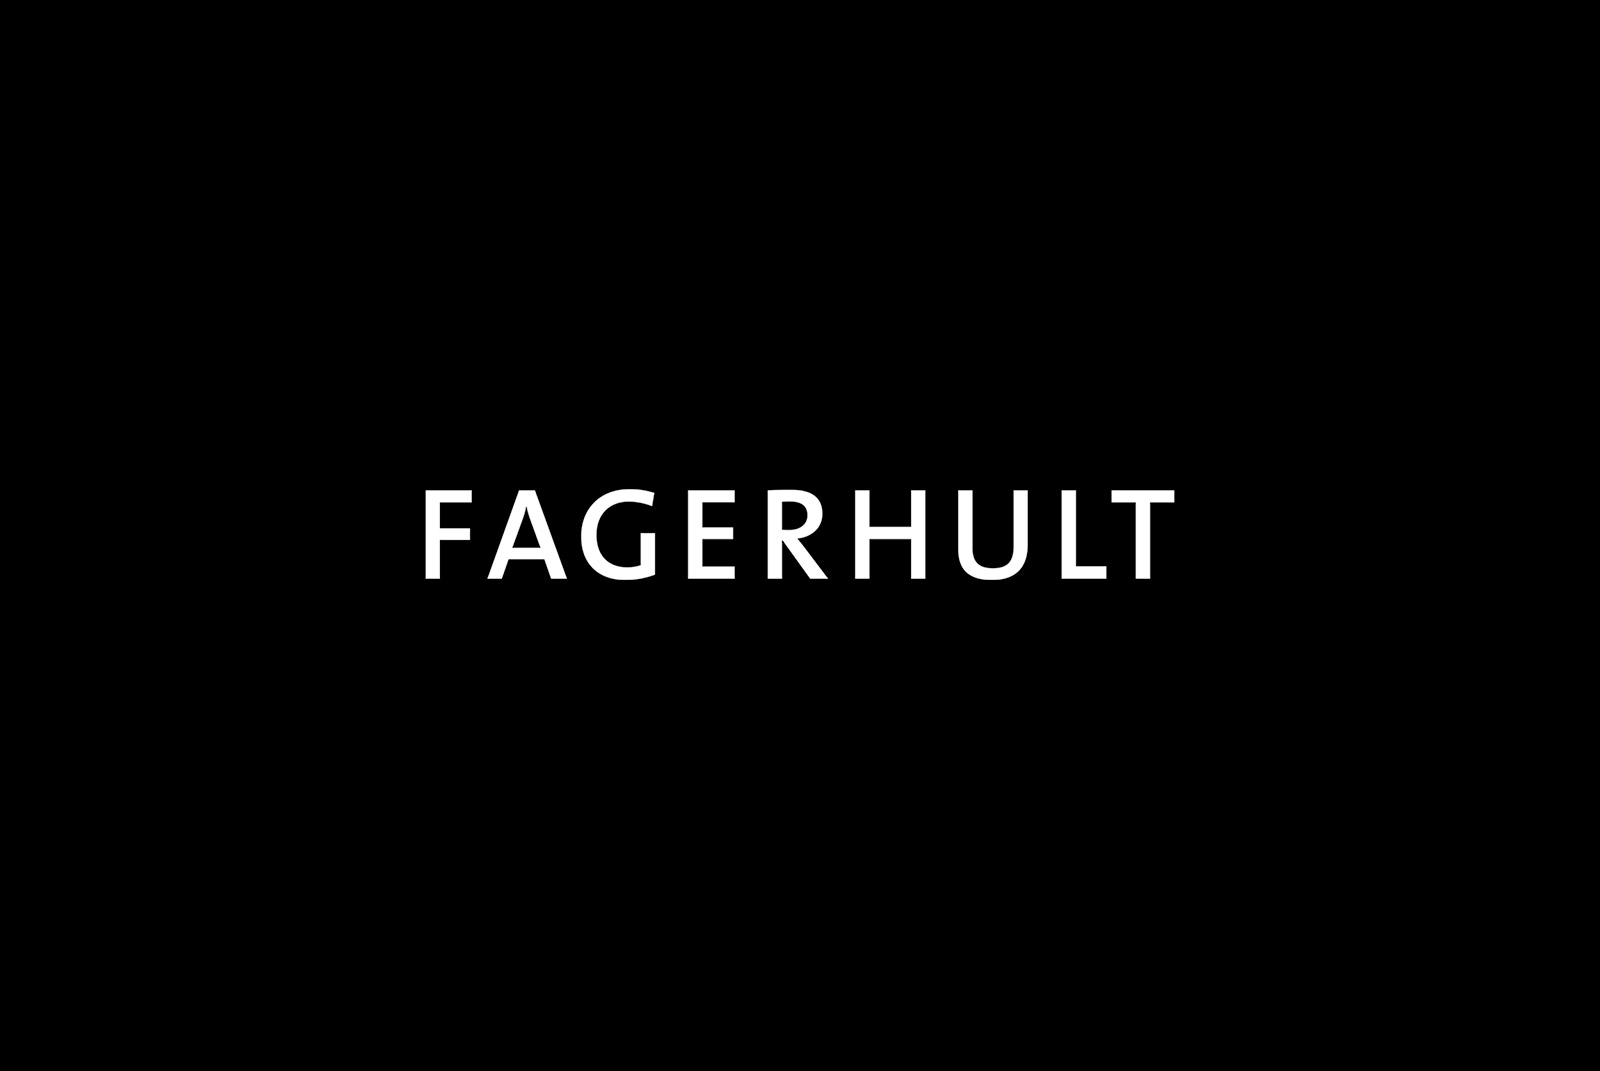 Fagerhult - The Innovator #3